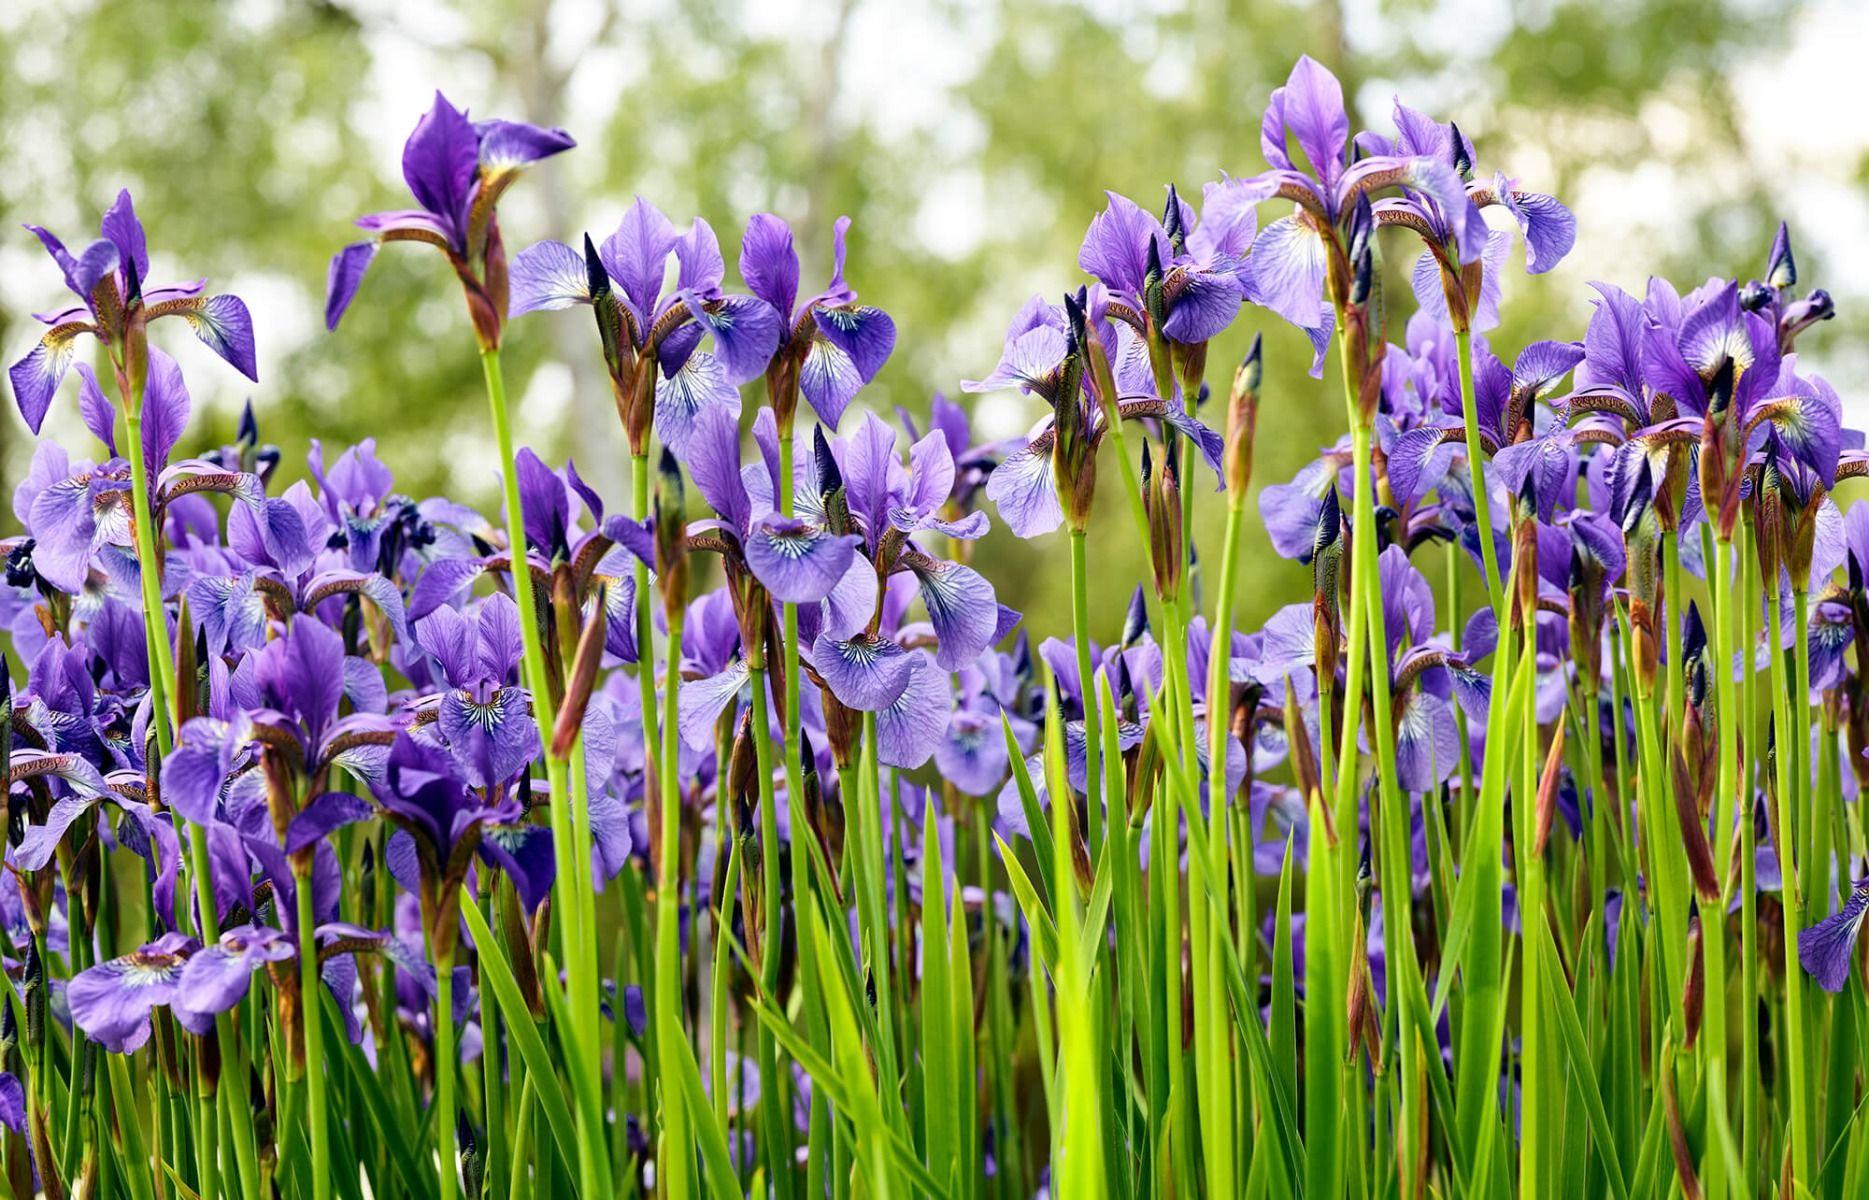 Flower fields - Irises  - Bedroom